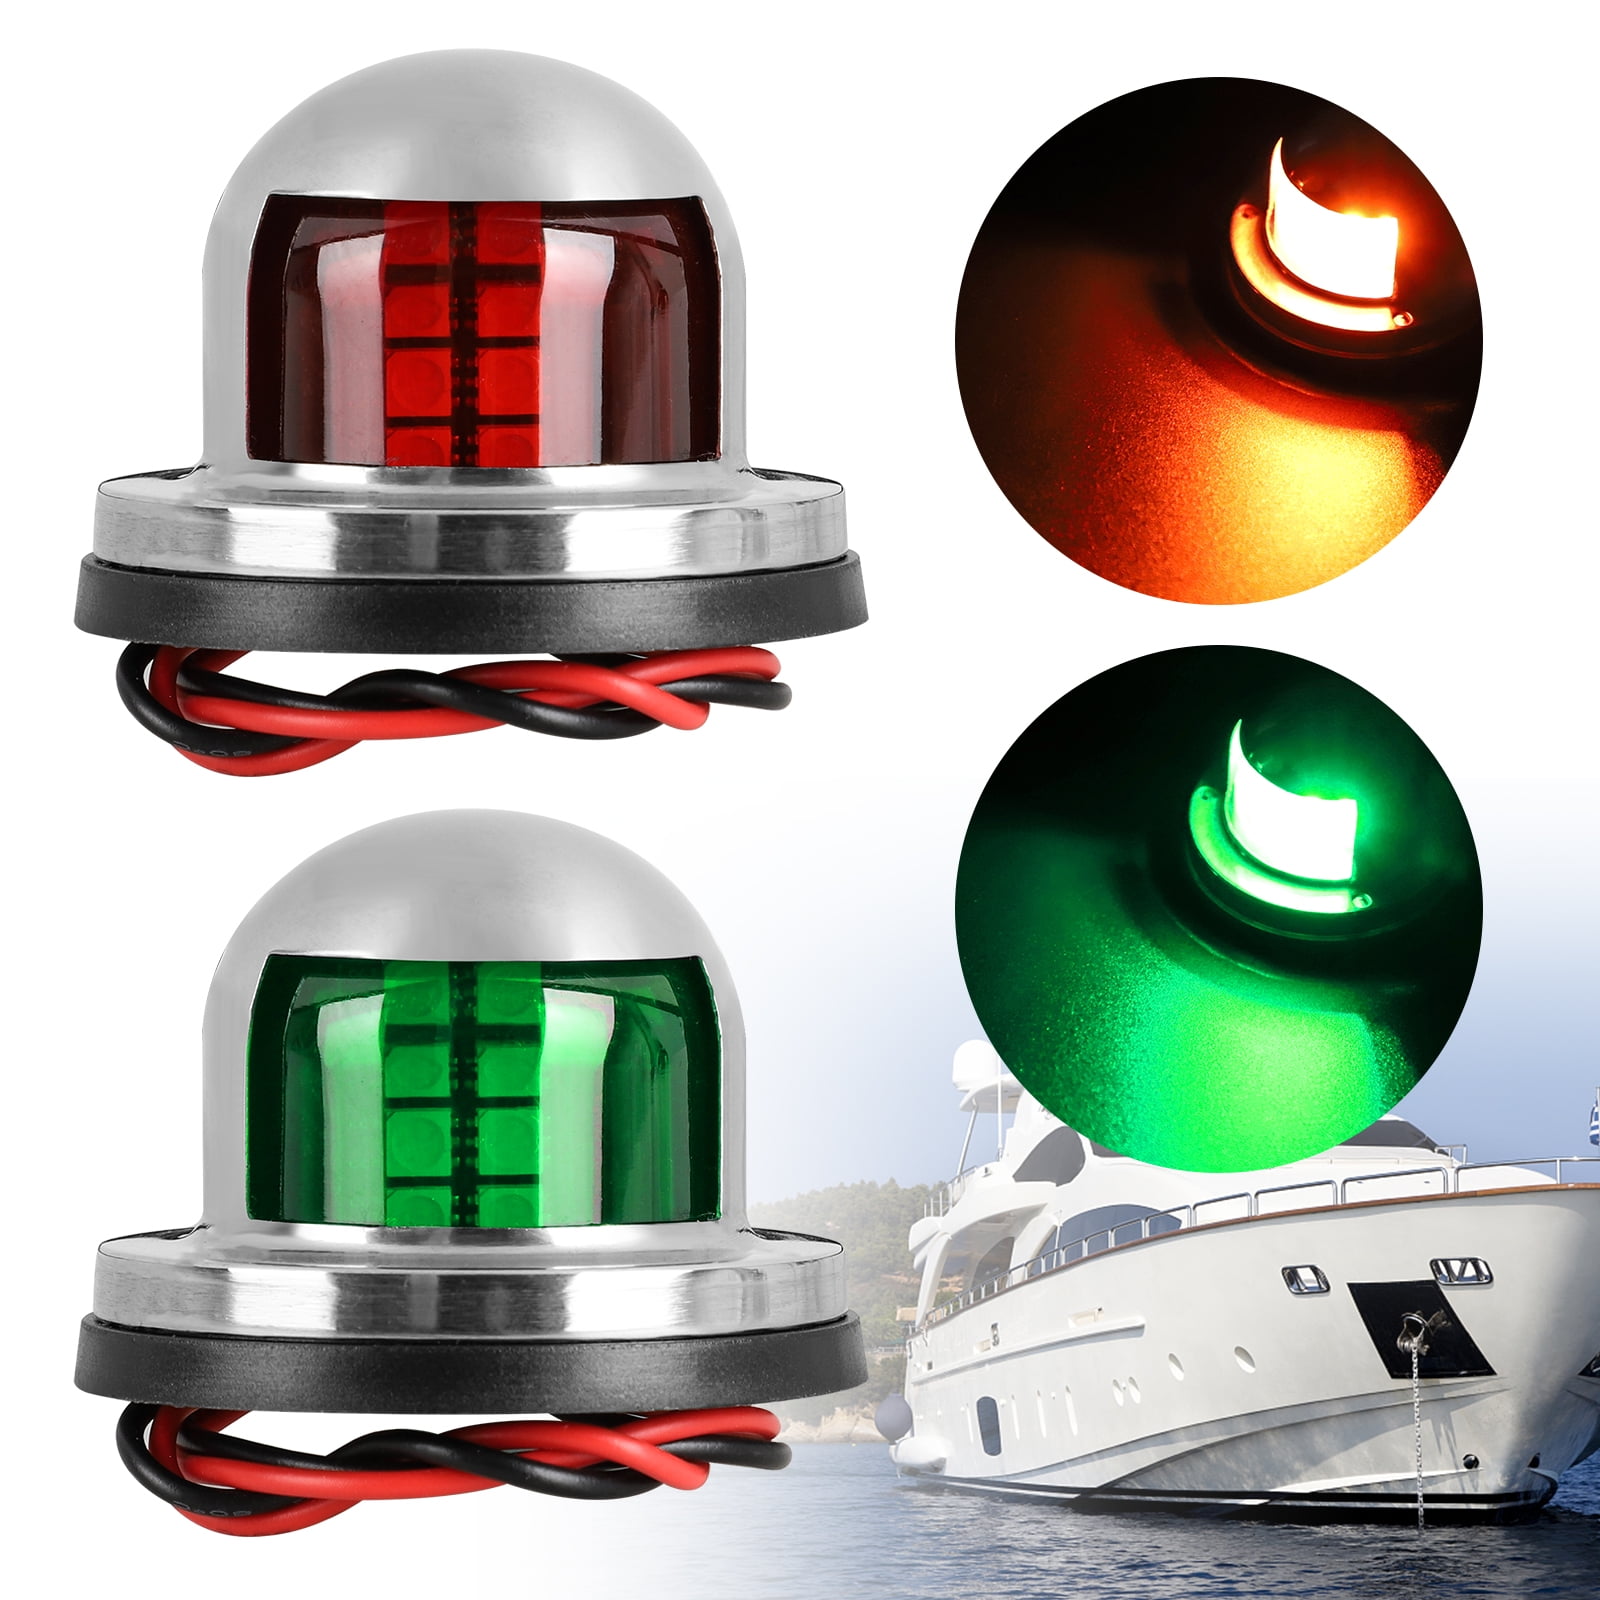 2pcs LED Navigation Lights Deck Mount, EEEkit 12V New Marine